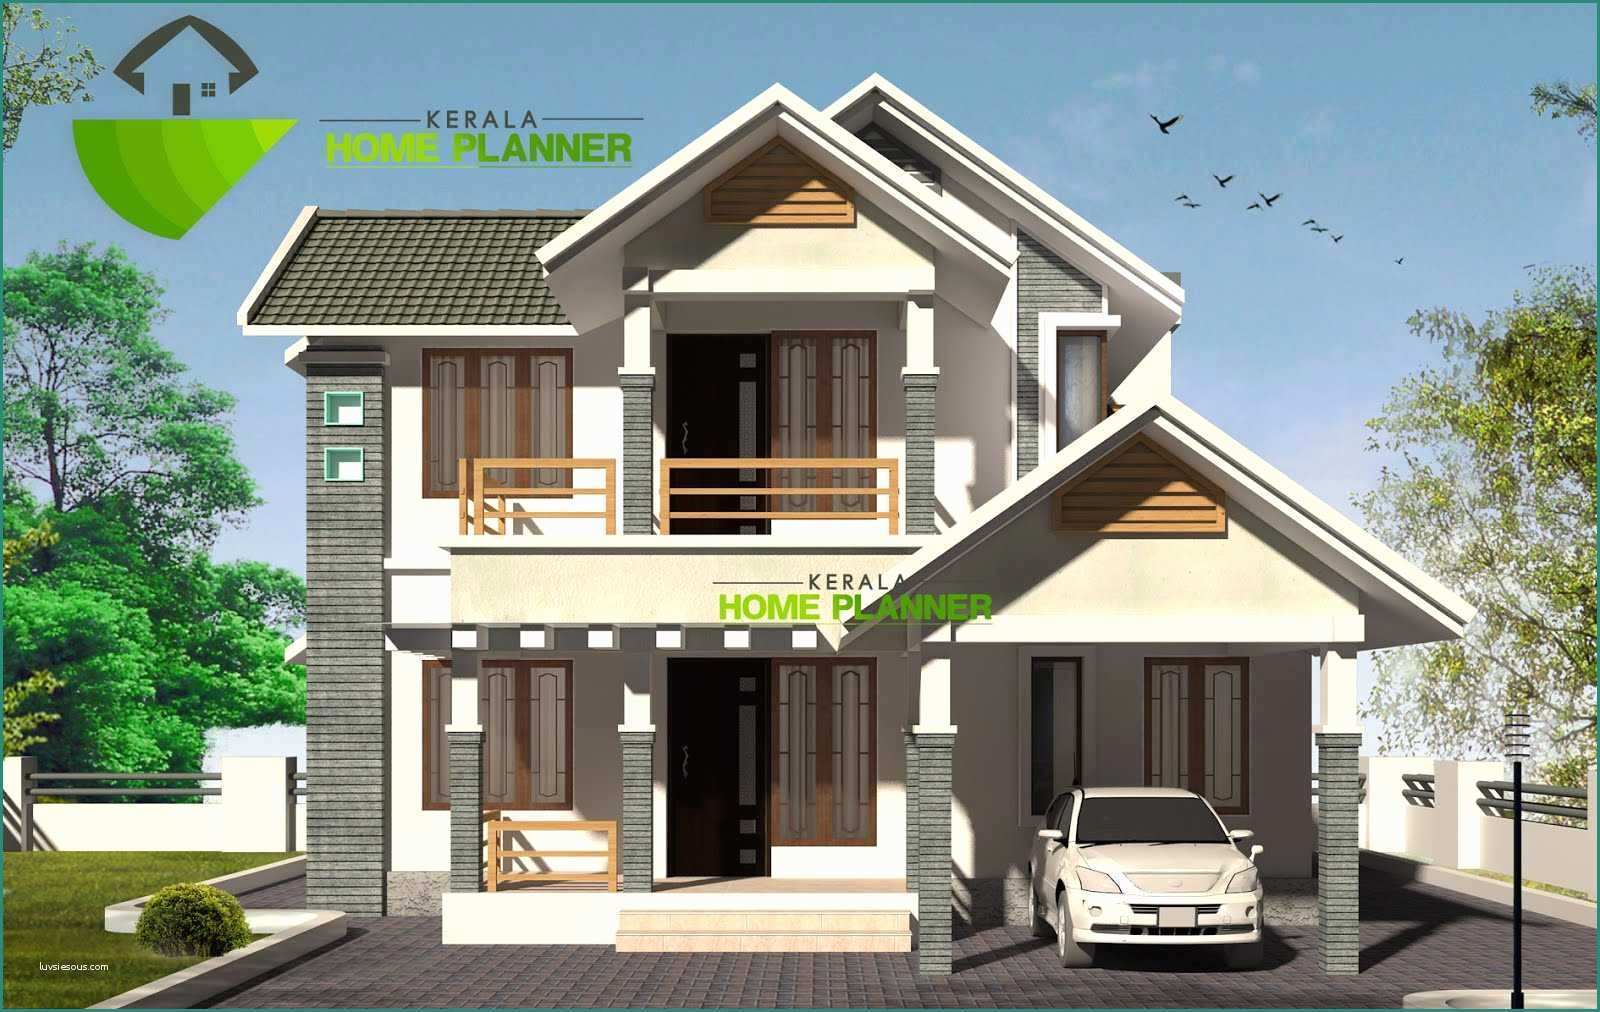 Poltrone Design Low Cost E Small Bud House Plans Kerala